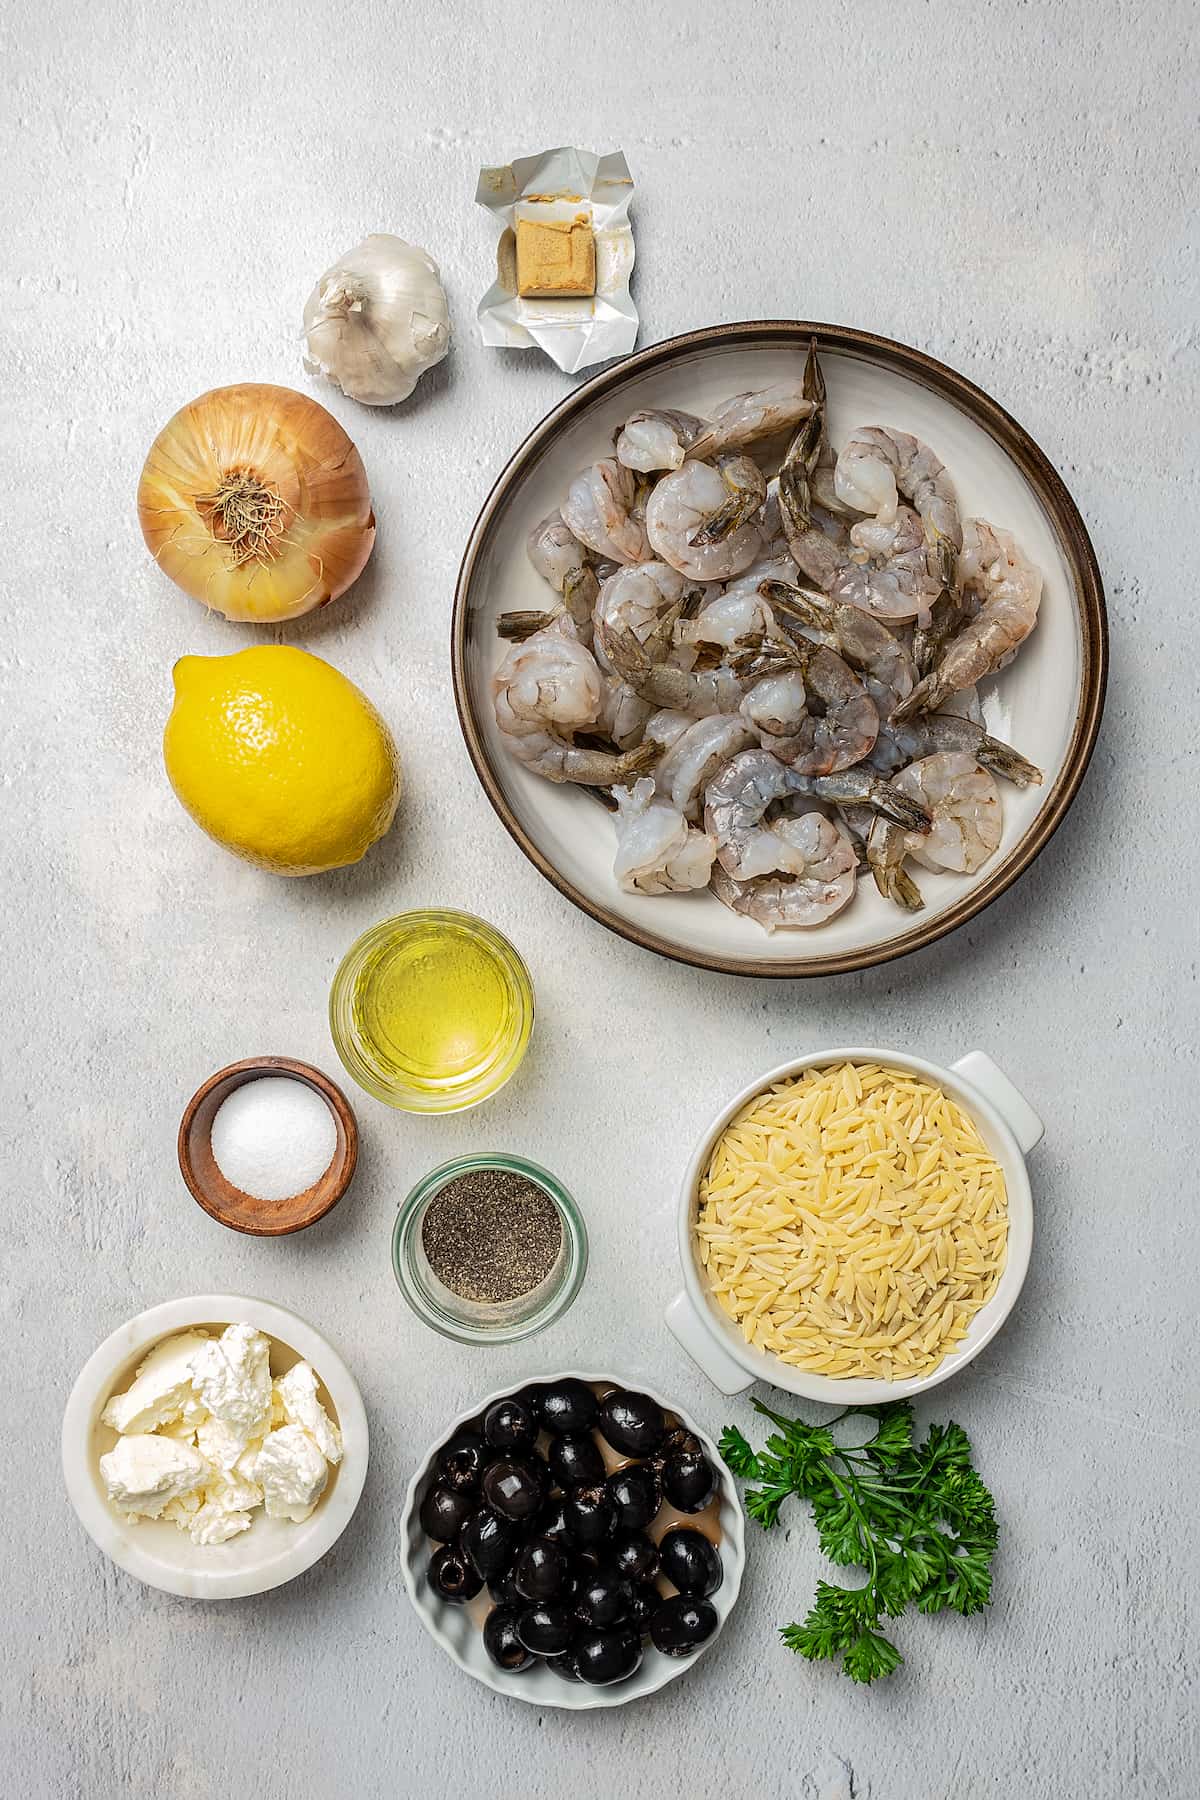 From top left: Seasoning cube, peeled shrimp, garlic and onion, lemon, olive oil, salt, pepper, orzo, feta, black olives, herbs.